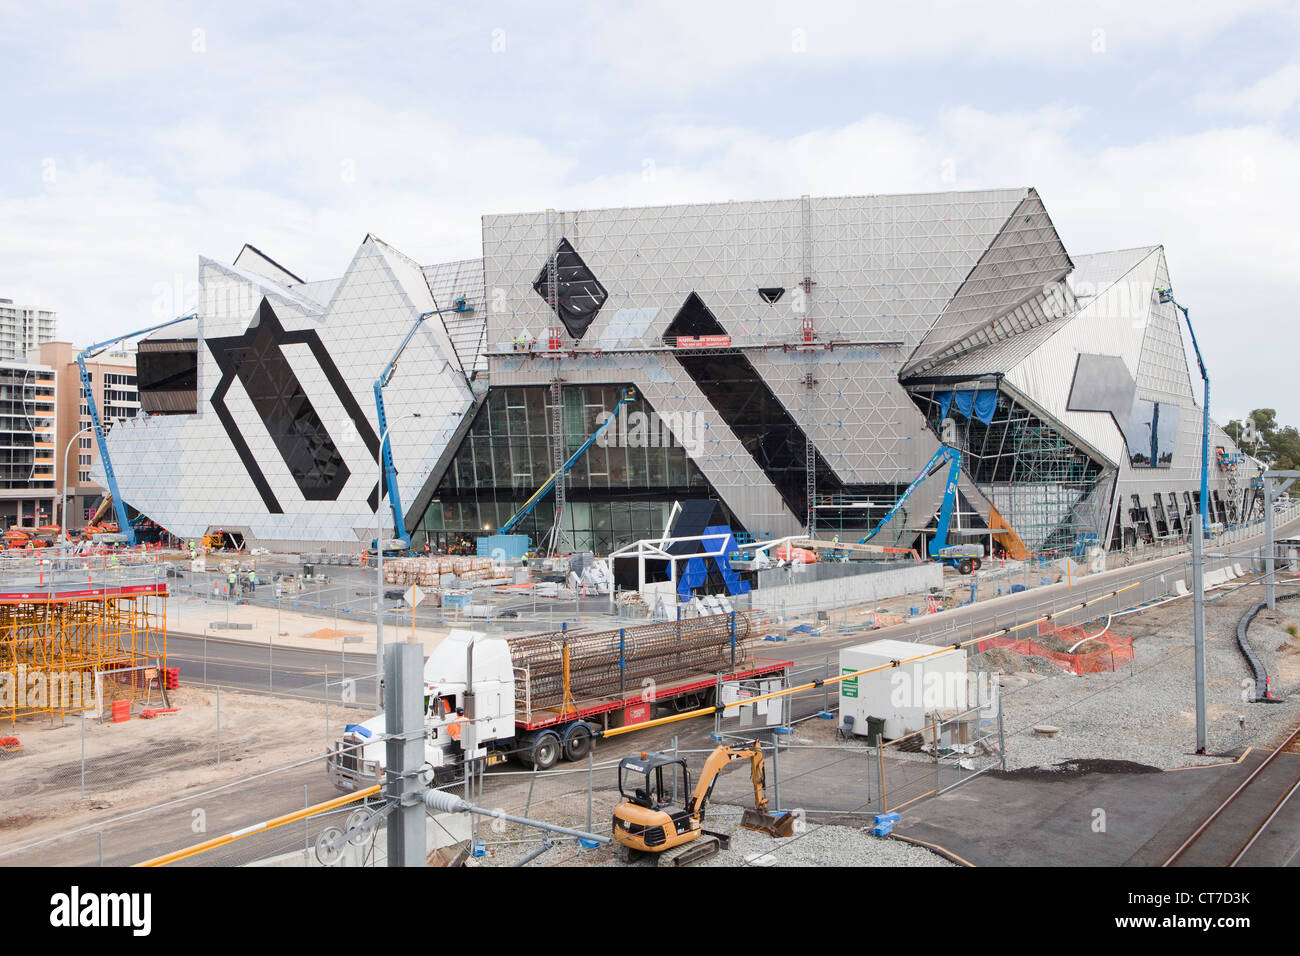 The new Perth Arena development under construction. Stock Photo